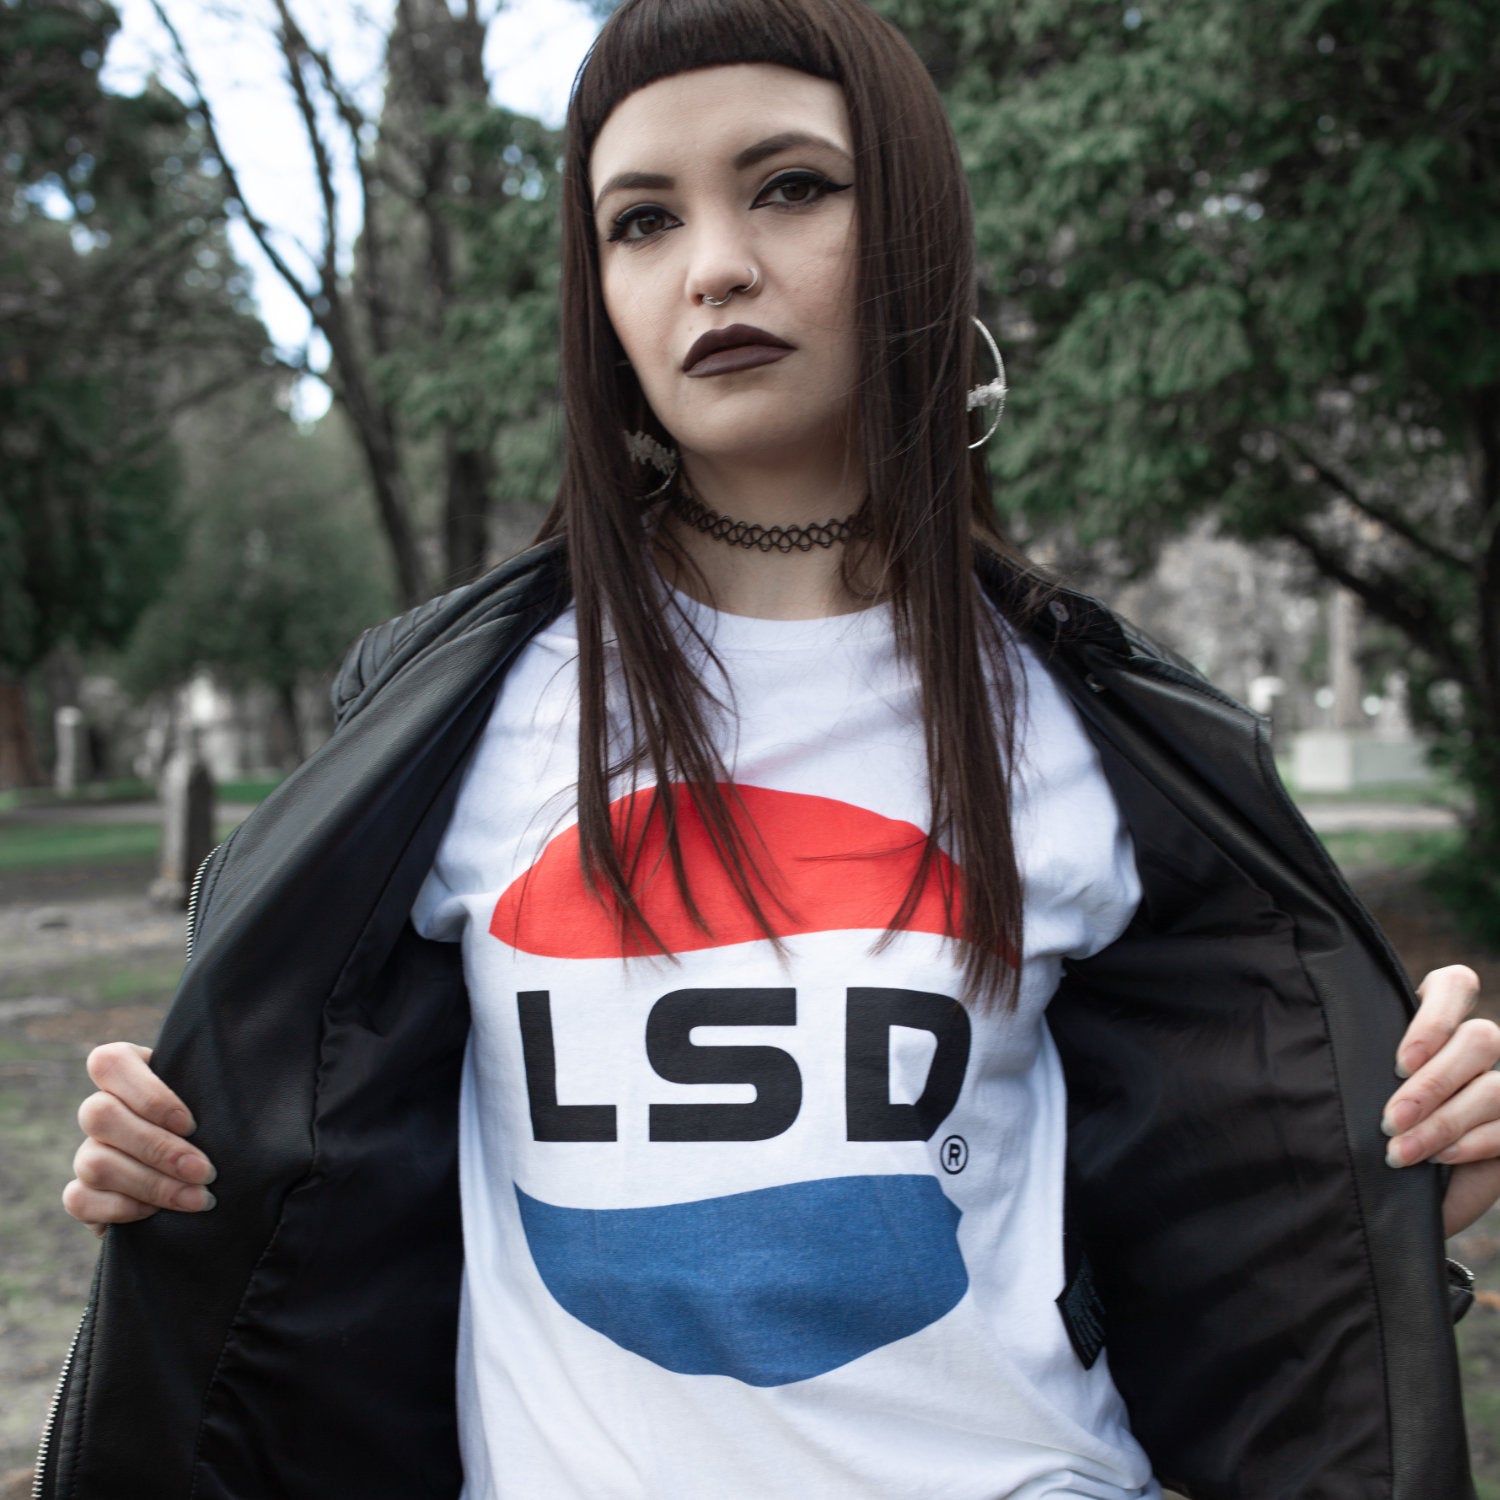 LSD Pepsi Premium Tee